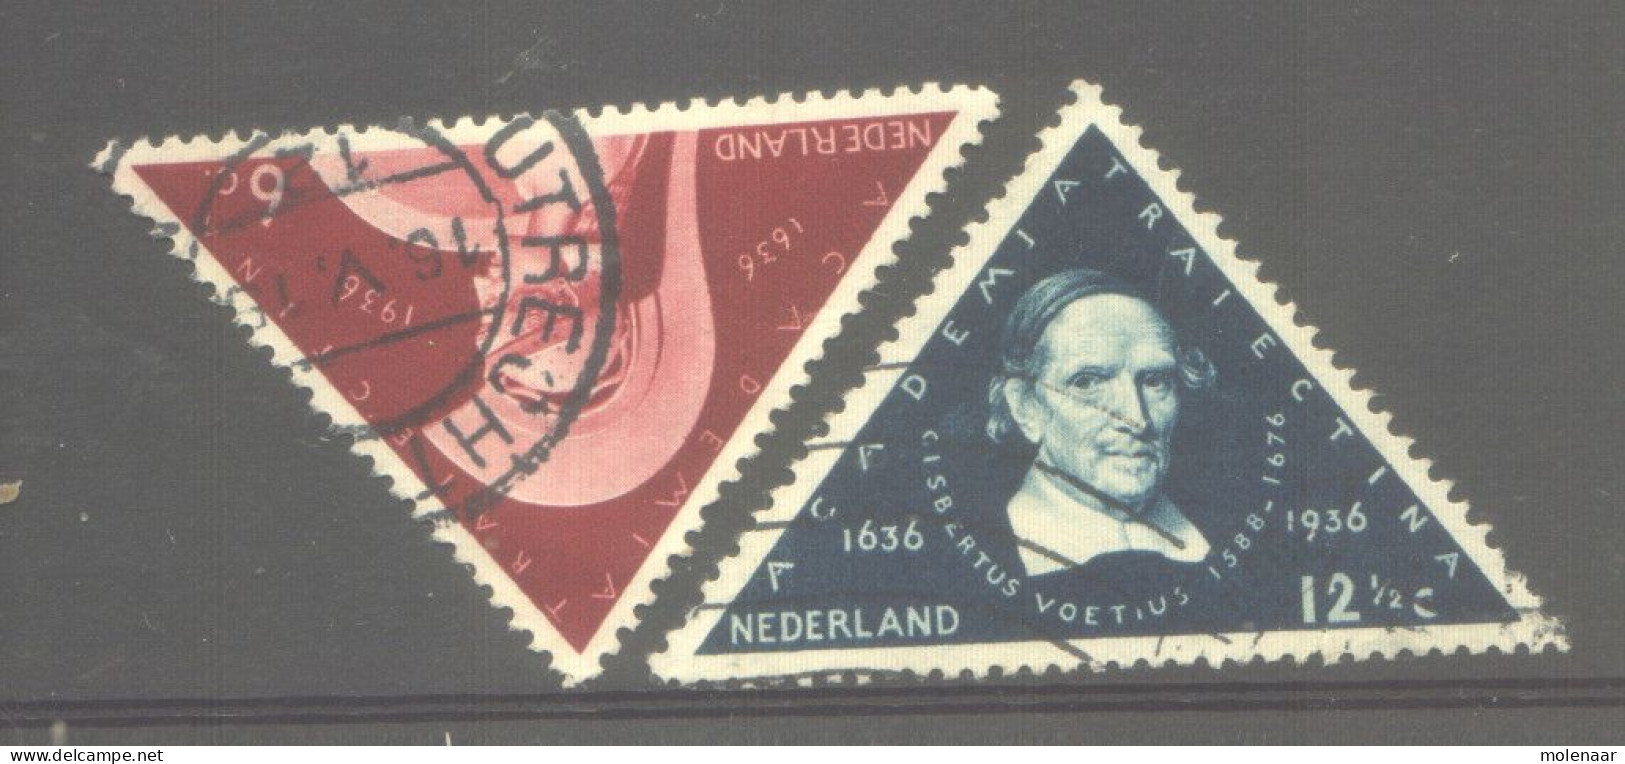 Postzegels > Europa > Nederland > Periode 1891-1948 (Wilhelmina) > 1891-1909 > 287-288 Gebruikt (11767) - Usados